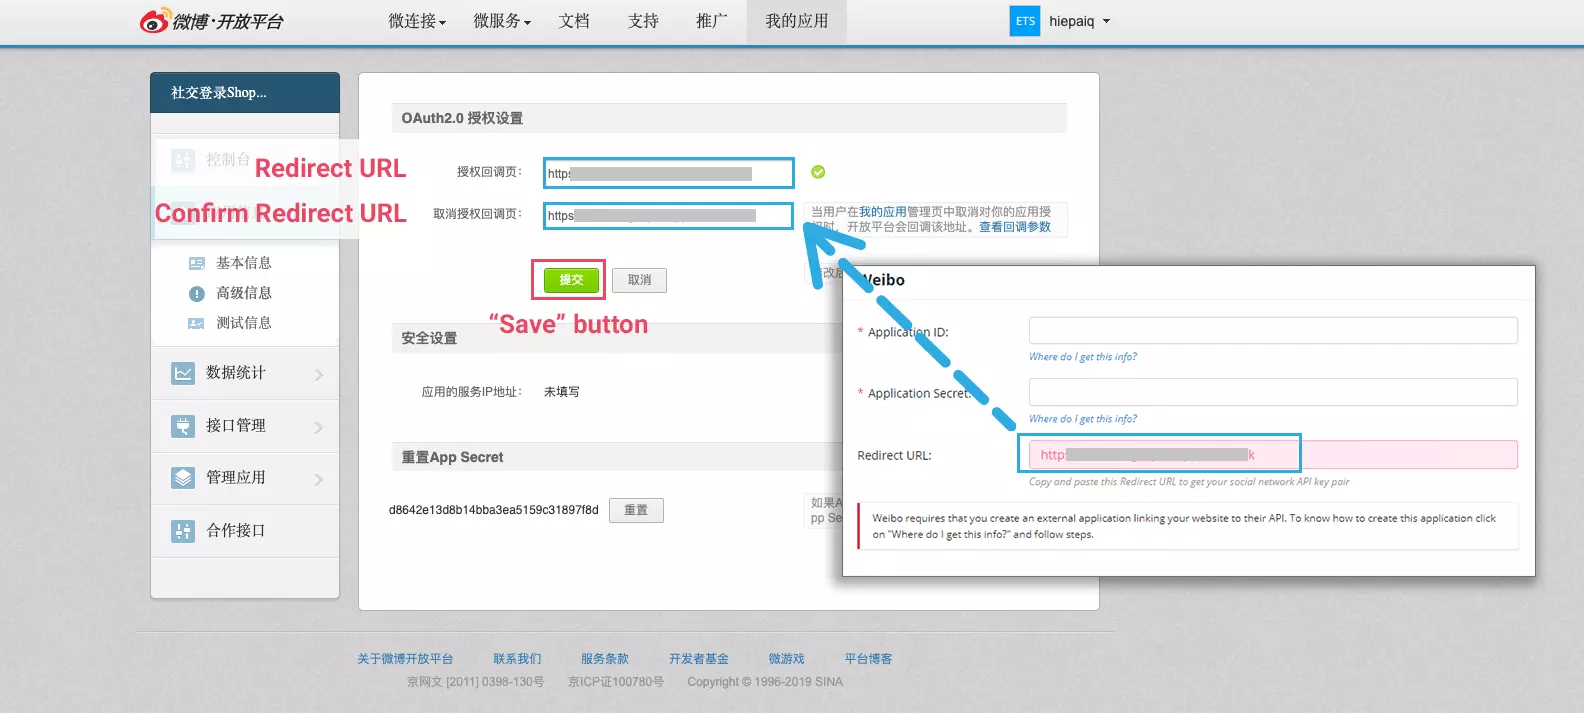 wordpress weibo login connect enter redirect url and website url